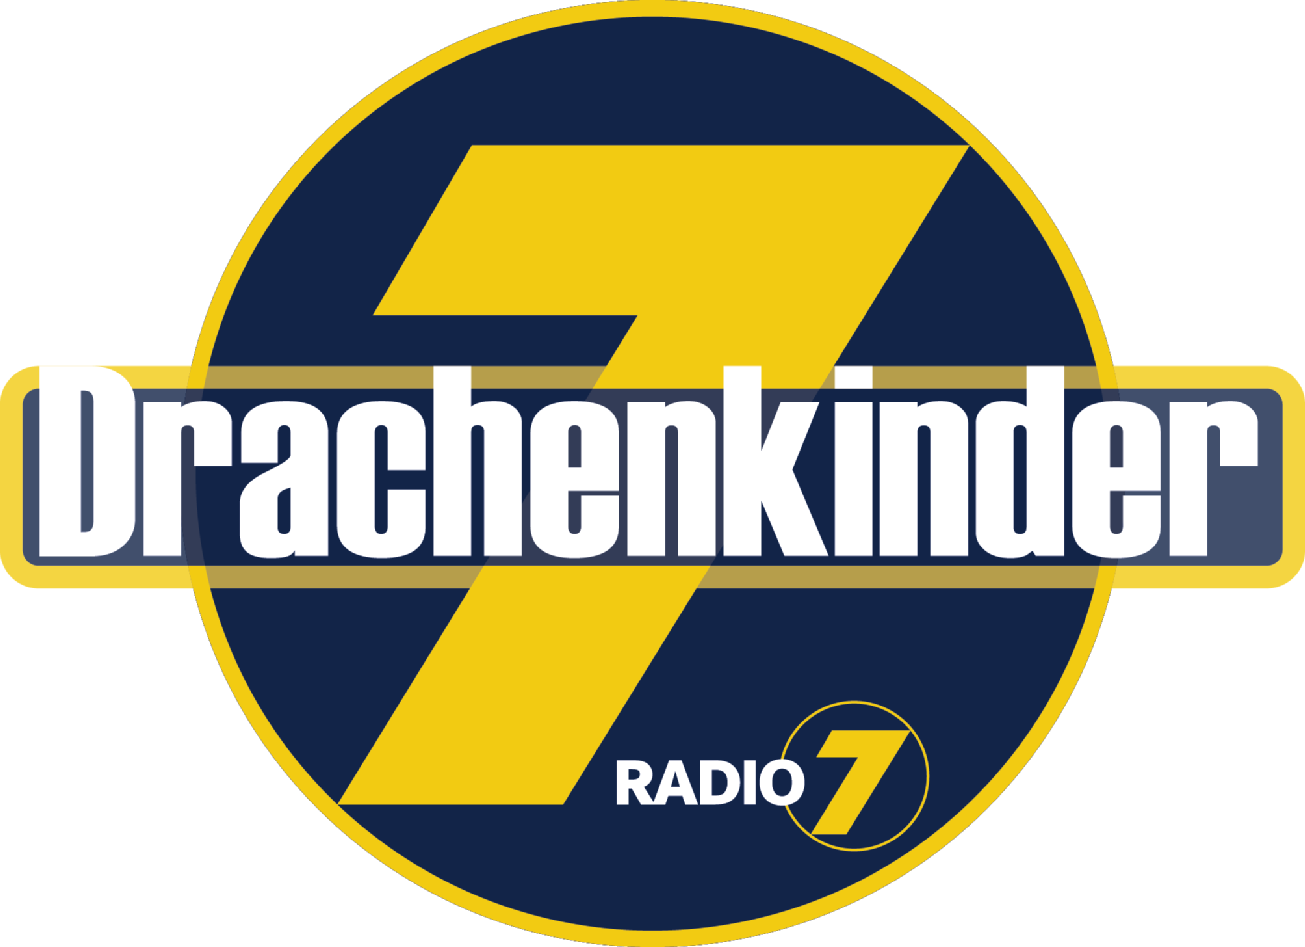 Radio7 Drachenkinder